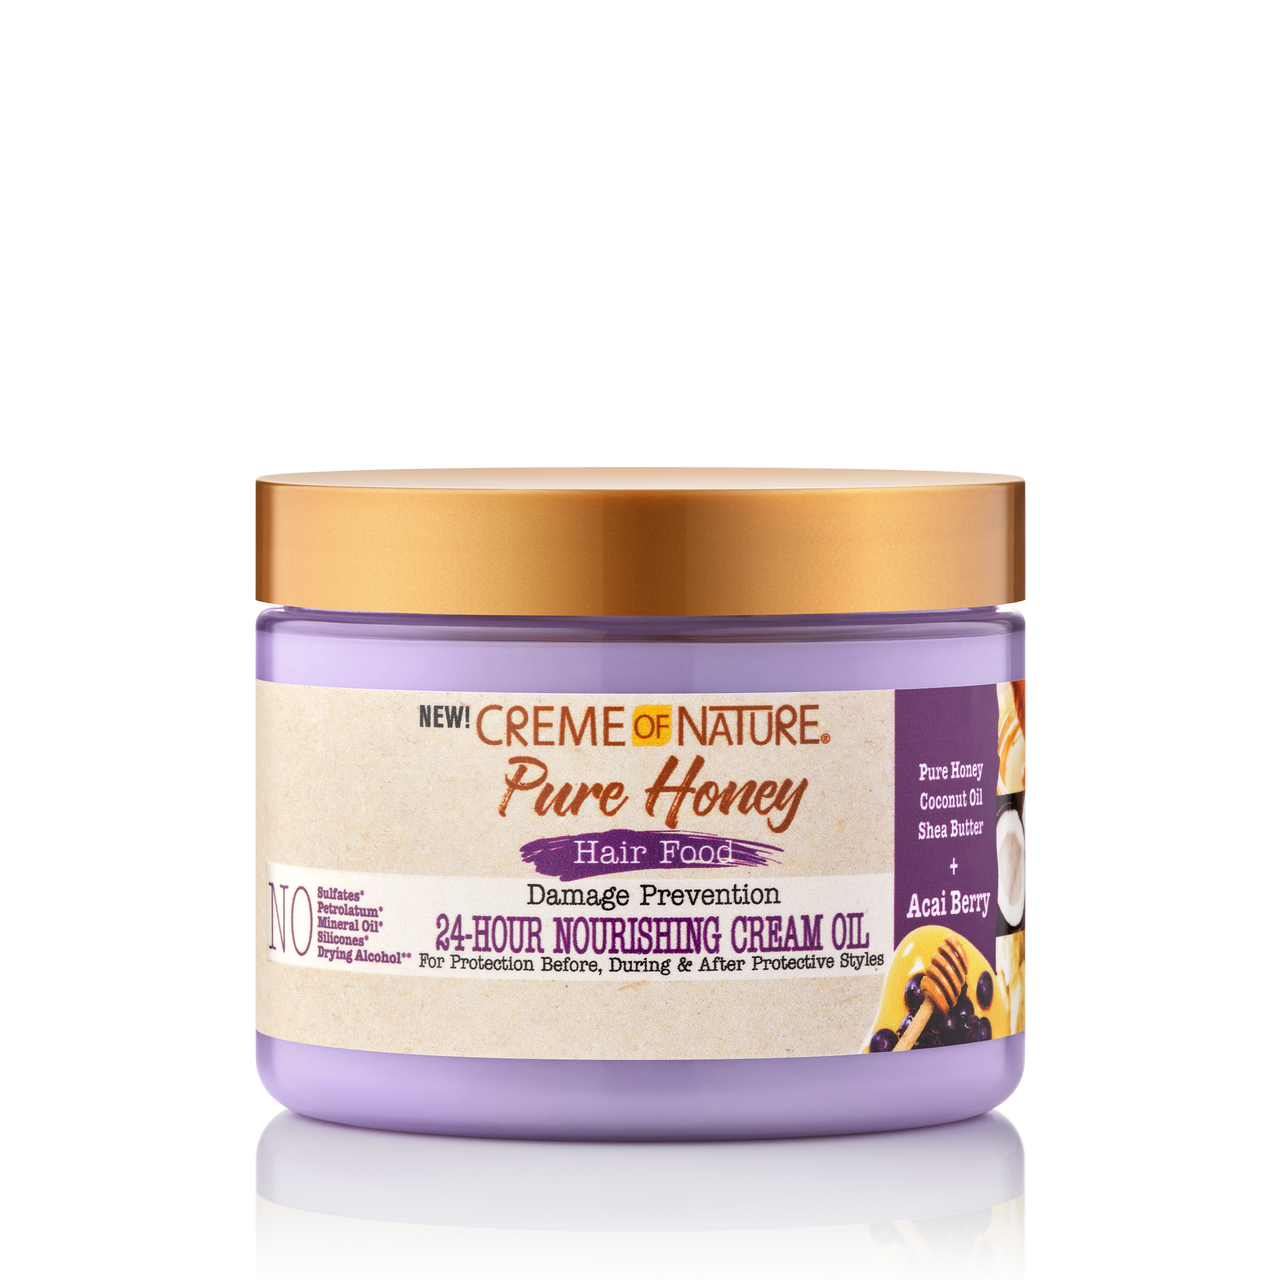 Damage Prevention 24-Hour Nourishing Cream Oil - Creme of Nature®